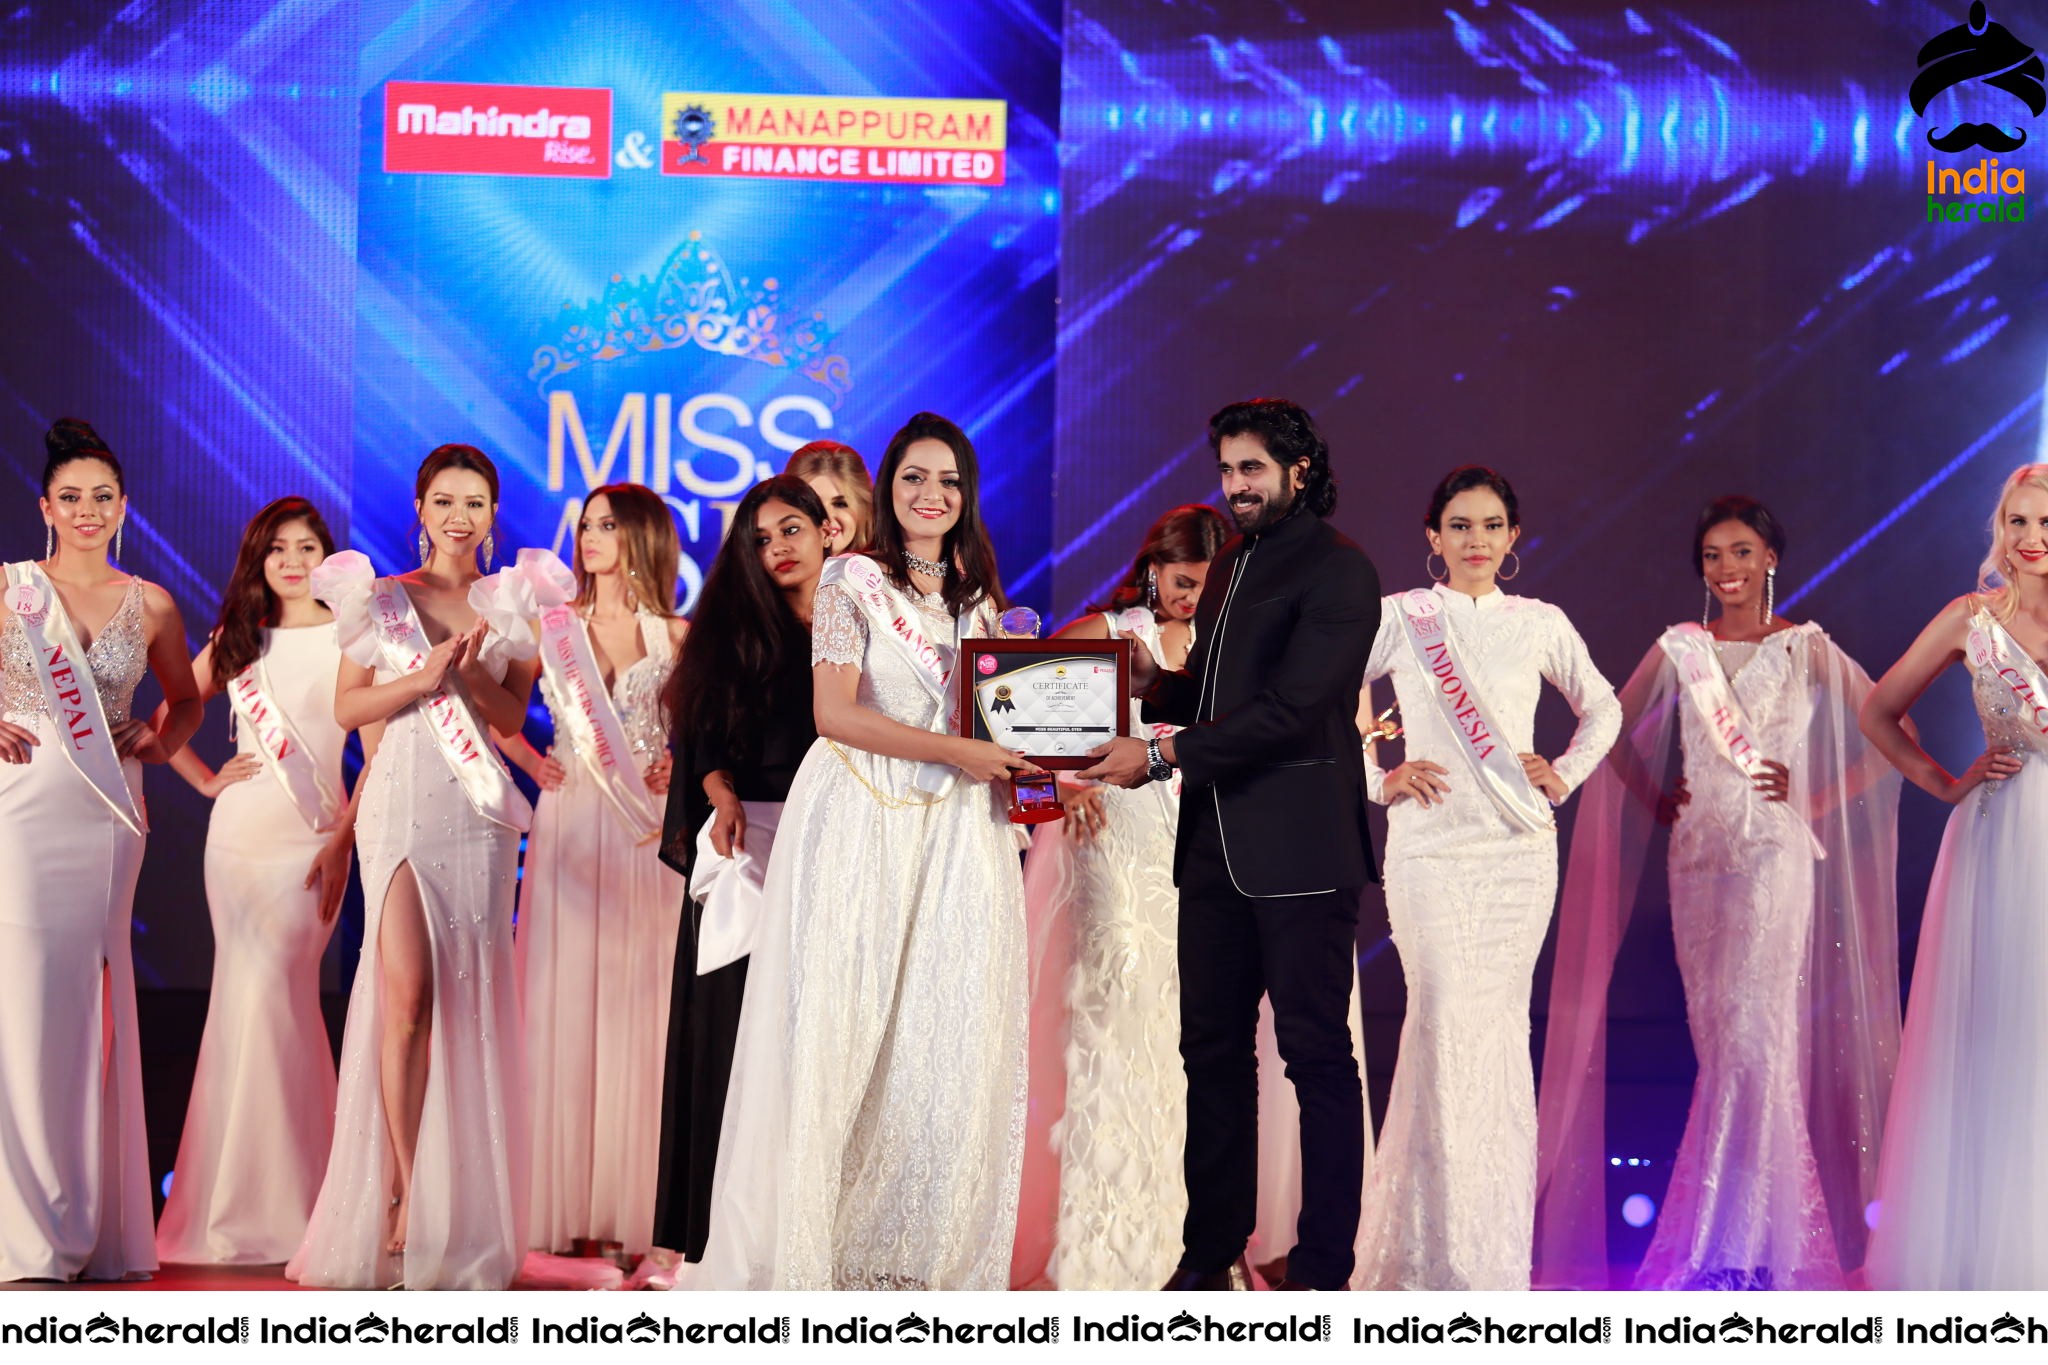 Mahindra And Manappuram Miss Asia Global 2019 Grand Final Fashion Show Set 1